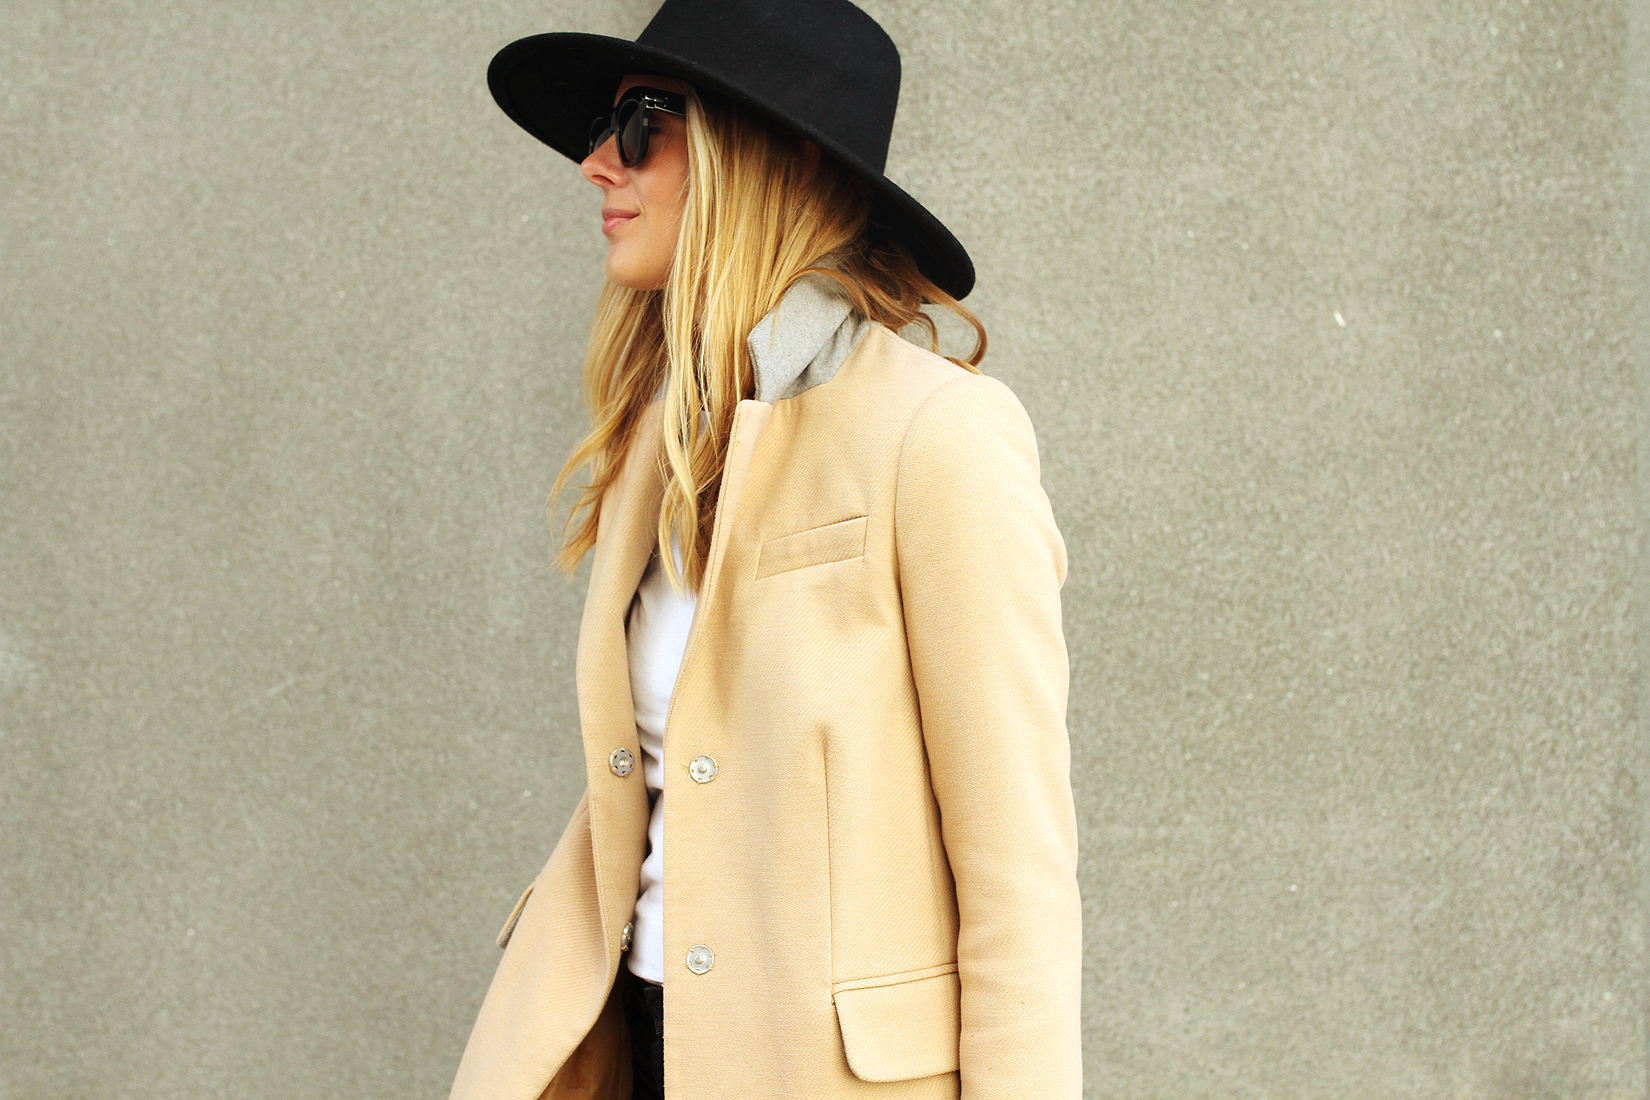 fashion-jackson-asos-contrast-collar-coat-black-hat